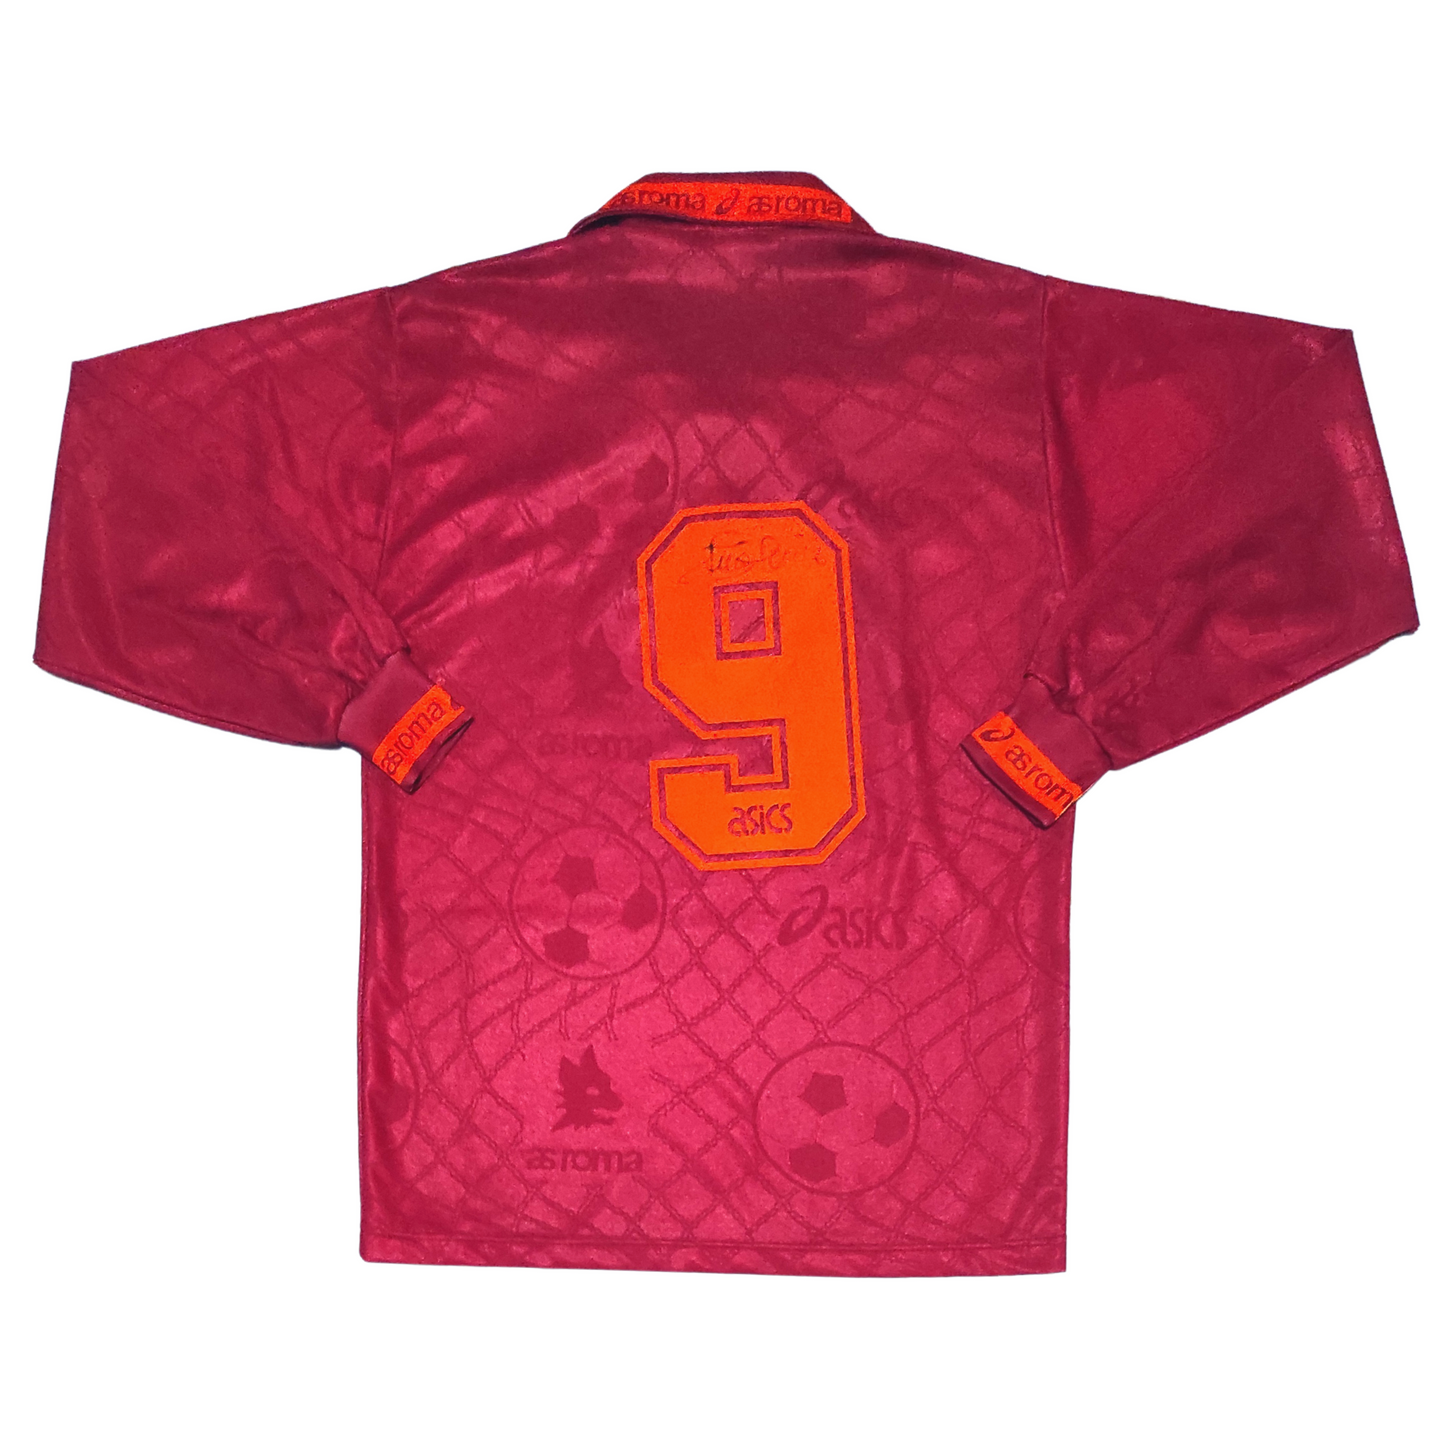 Roma Home L/S Shirt 1994-1995 #9 Balbo (S)